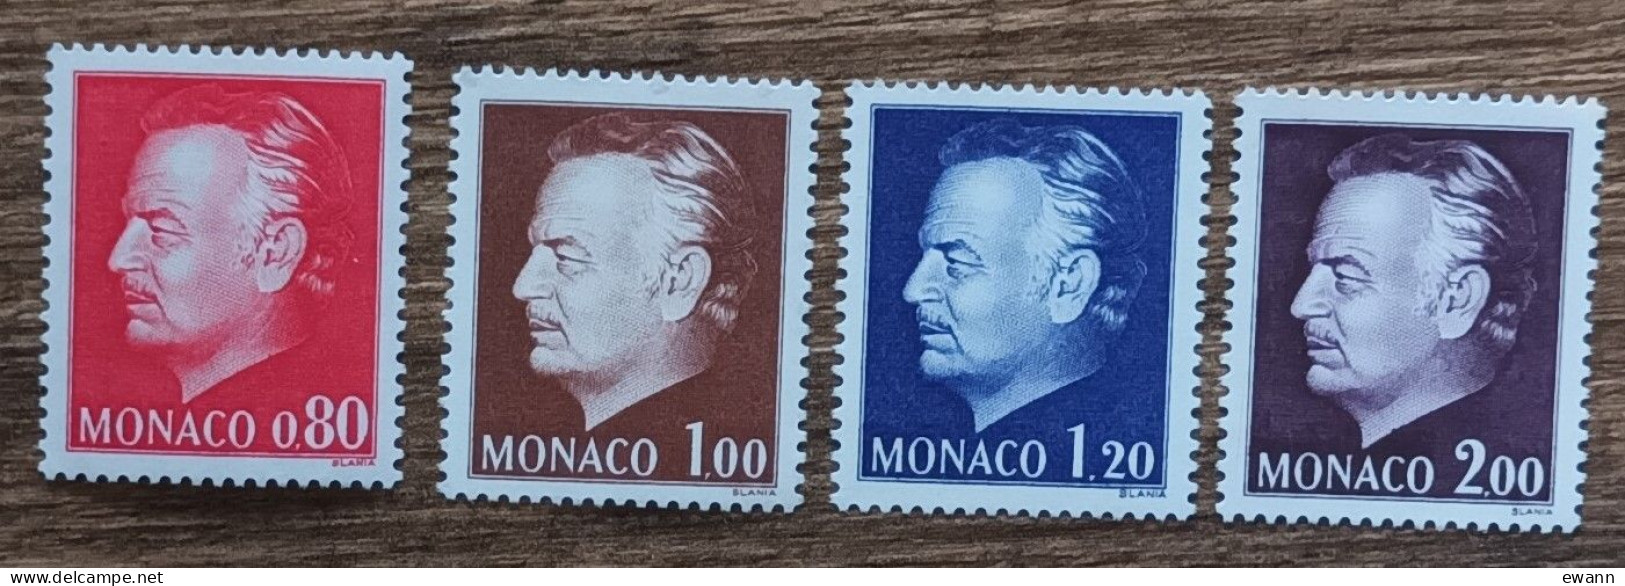 Monaco - YT N°993 à 996 - Nouvelle Effigie Du Prince Rainier III - 1974 - Neuf - Unused Stamps